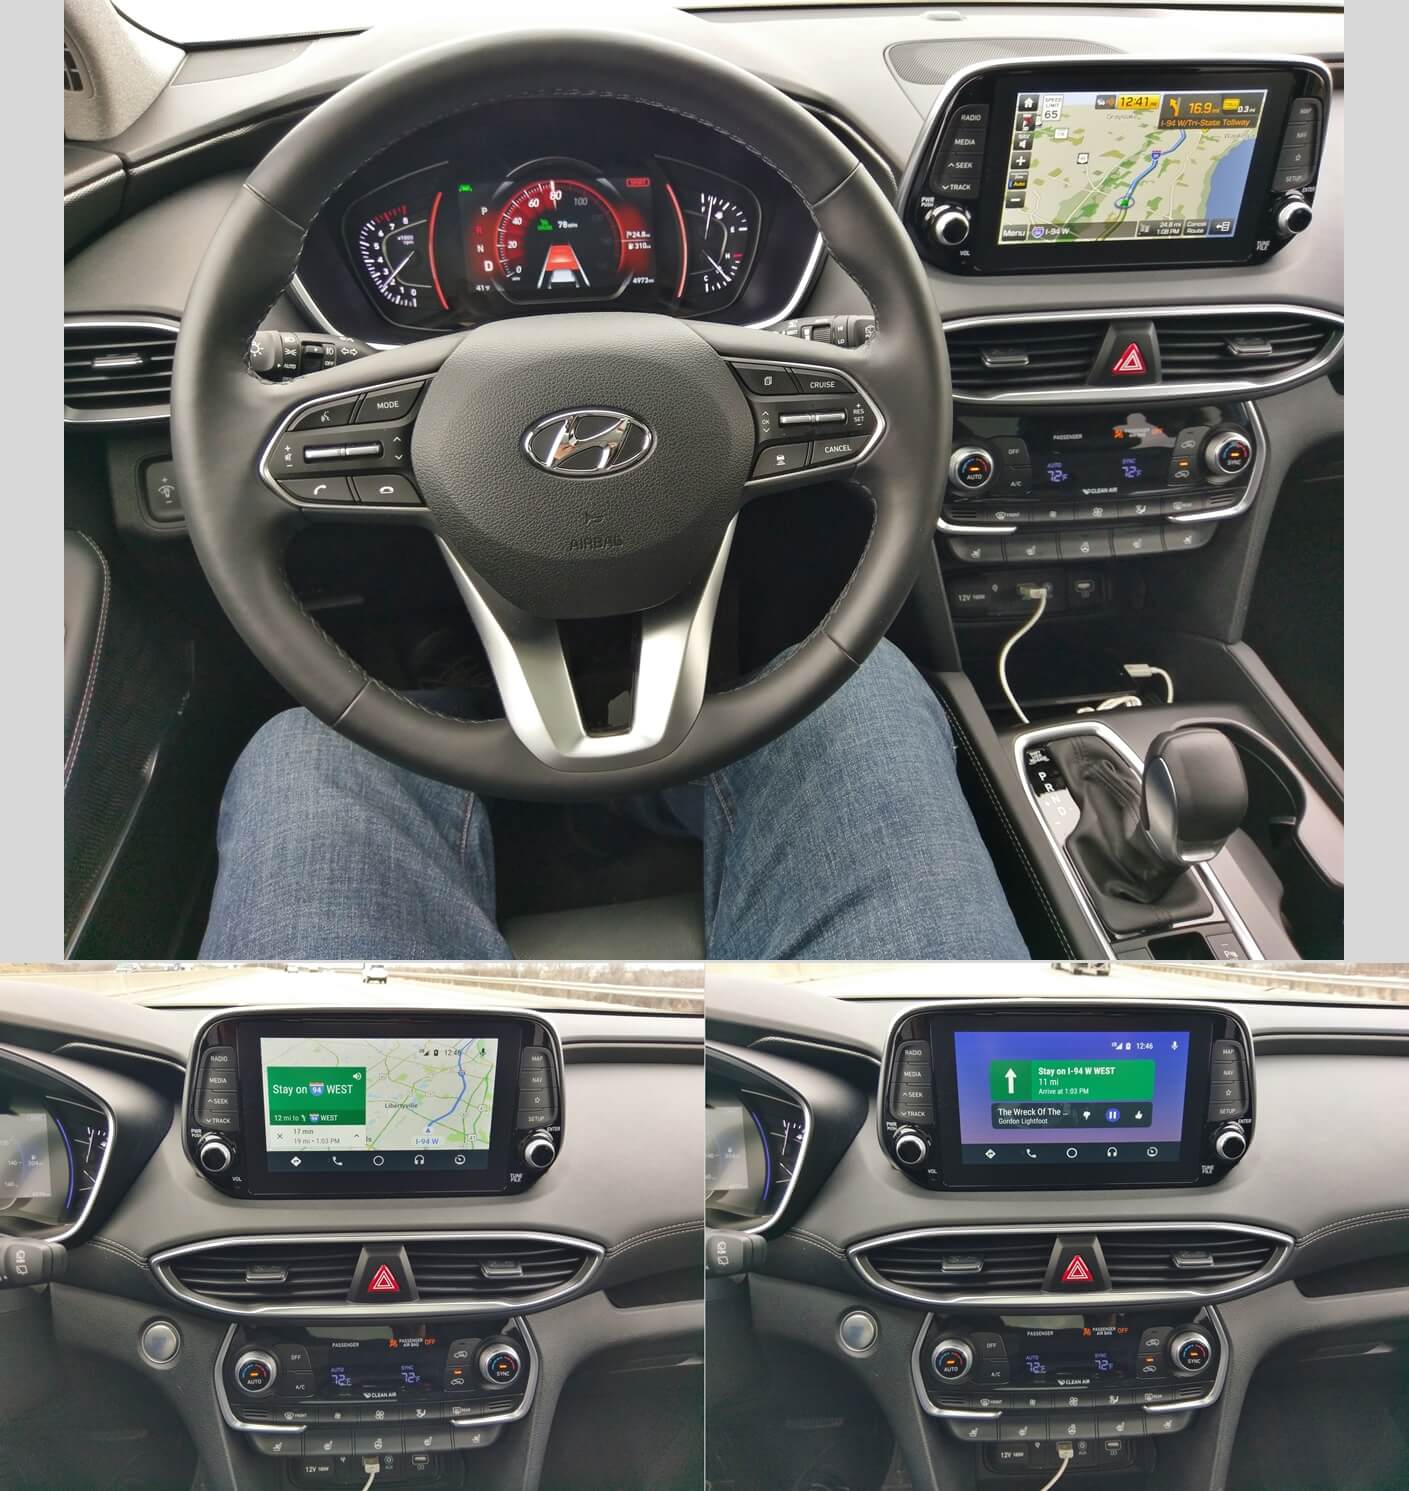 2019 Hyundai Santa Fe 2.0T Ultimate AWD: Native GPS navigation vs. Android Auto Google Maps voice command, guidance navigation